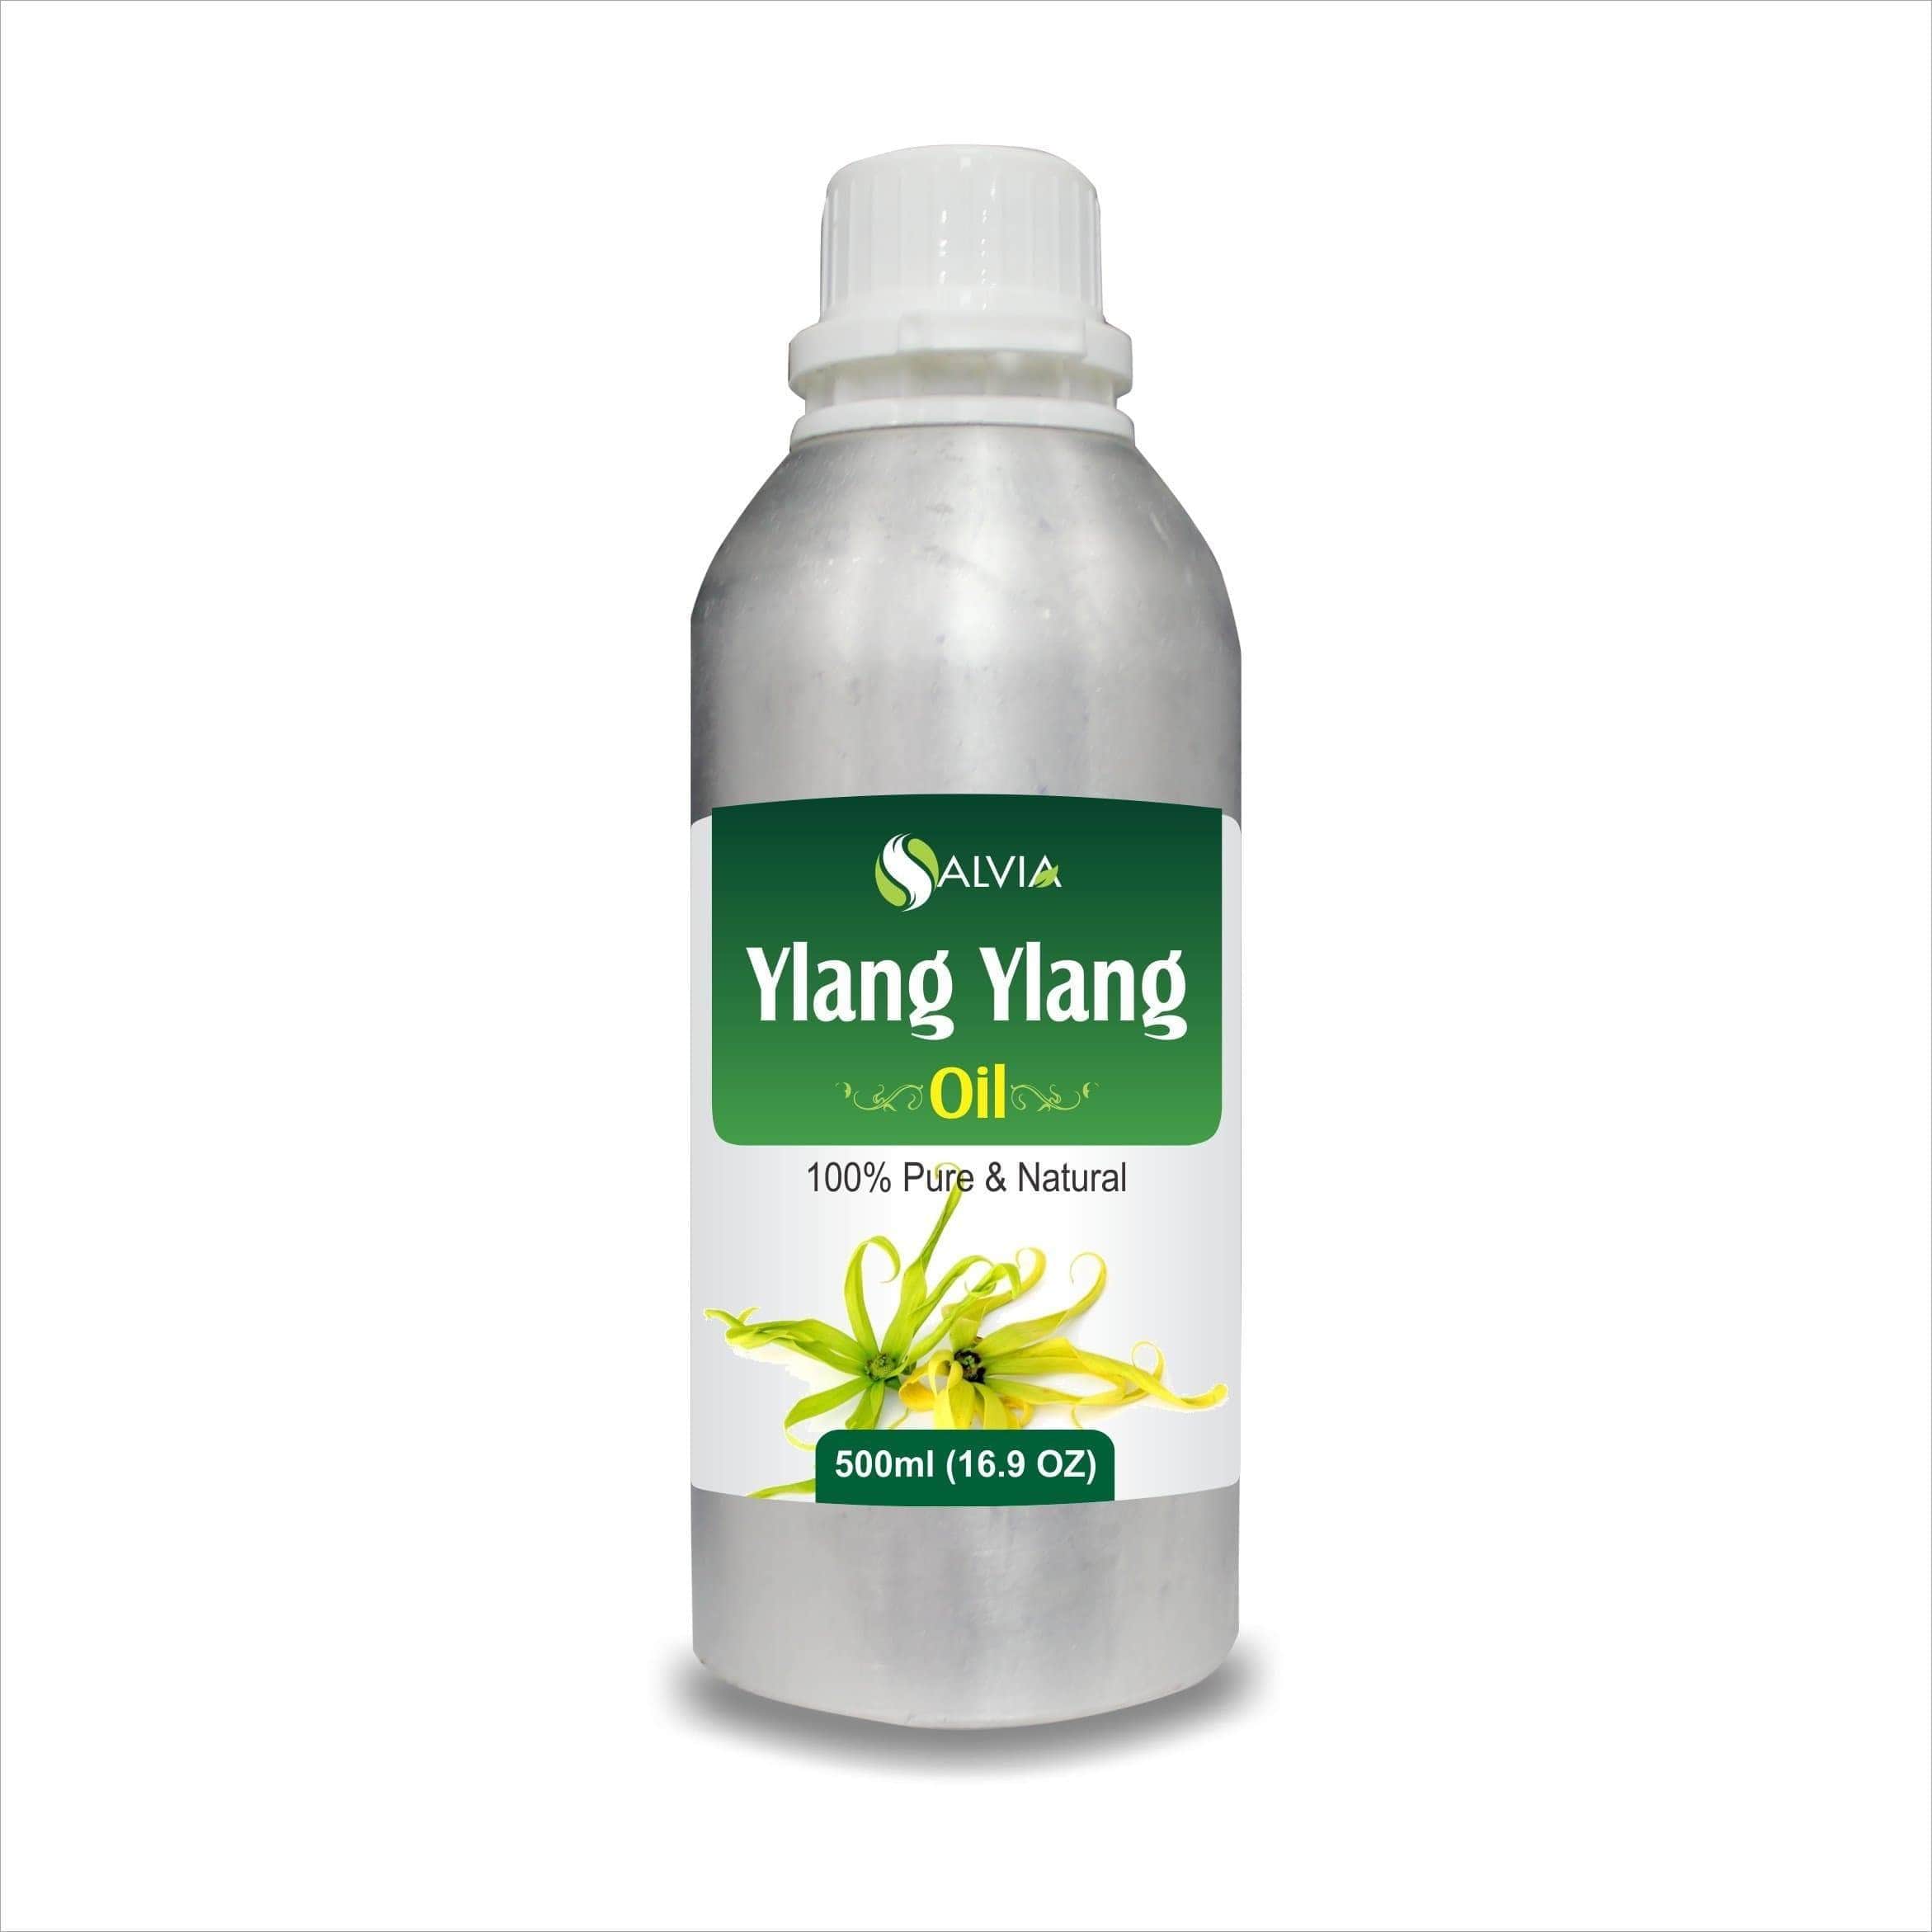 ylang ylang oil for hair - Shoprythm